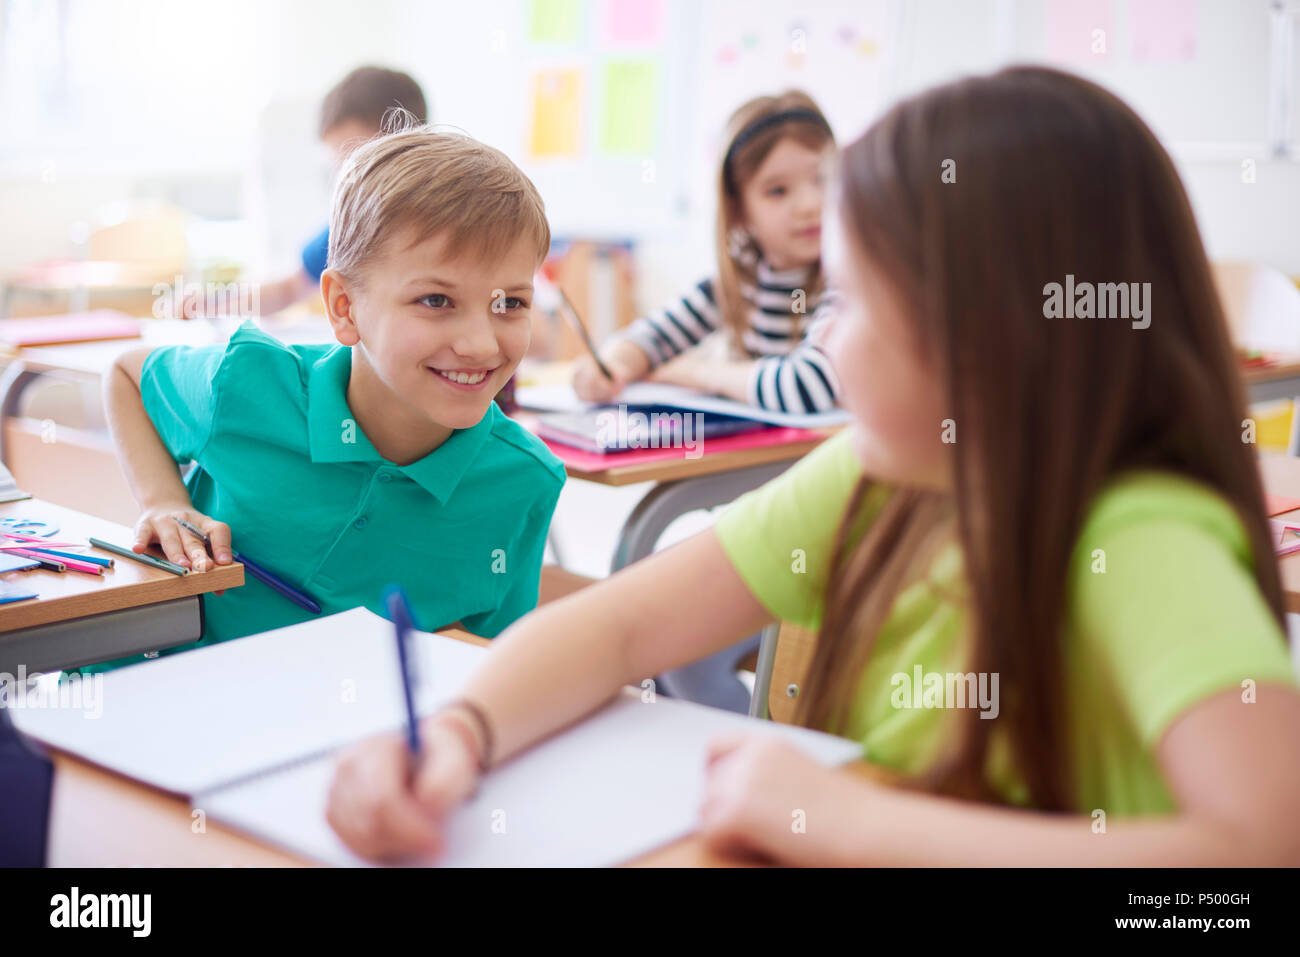 Schoolboy smiling at schoolgirl in class Stock Photo - Alamy